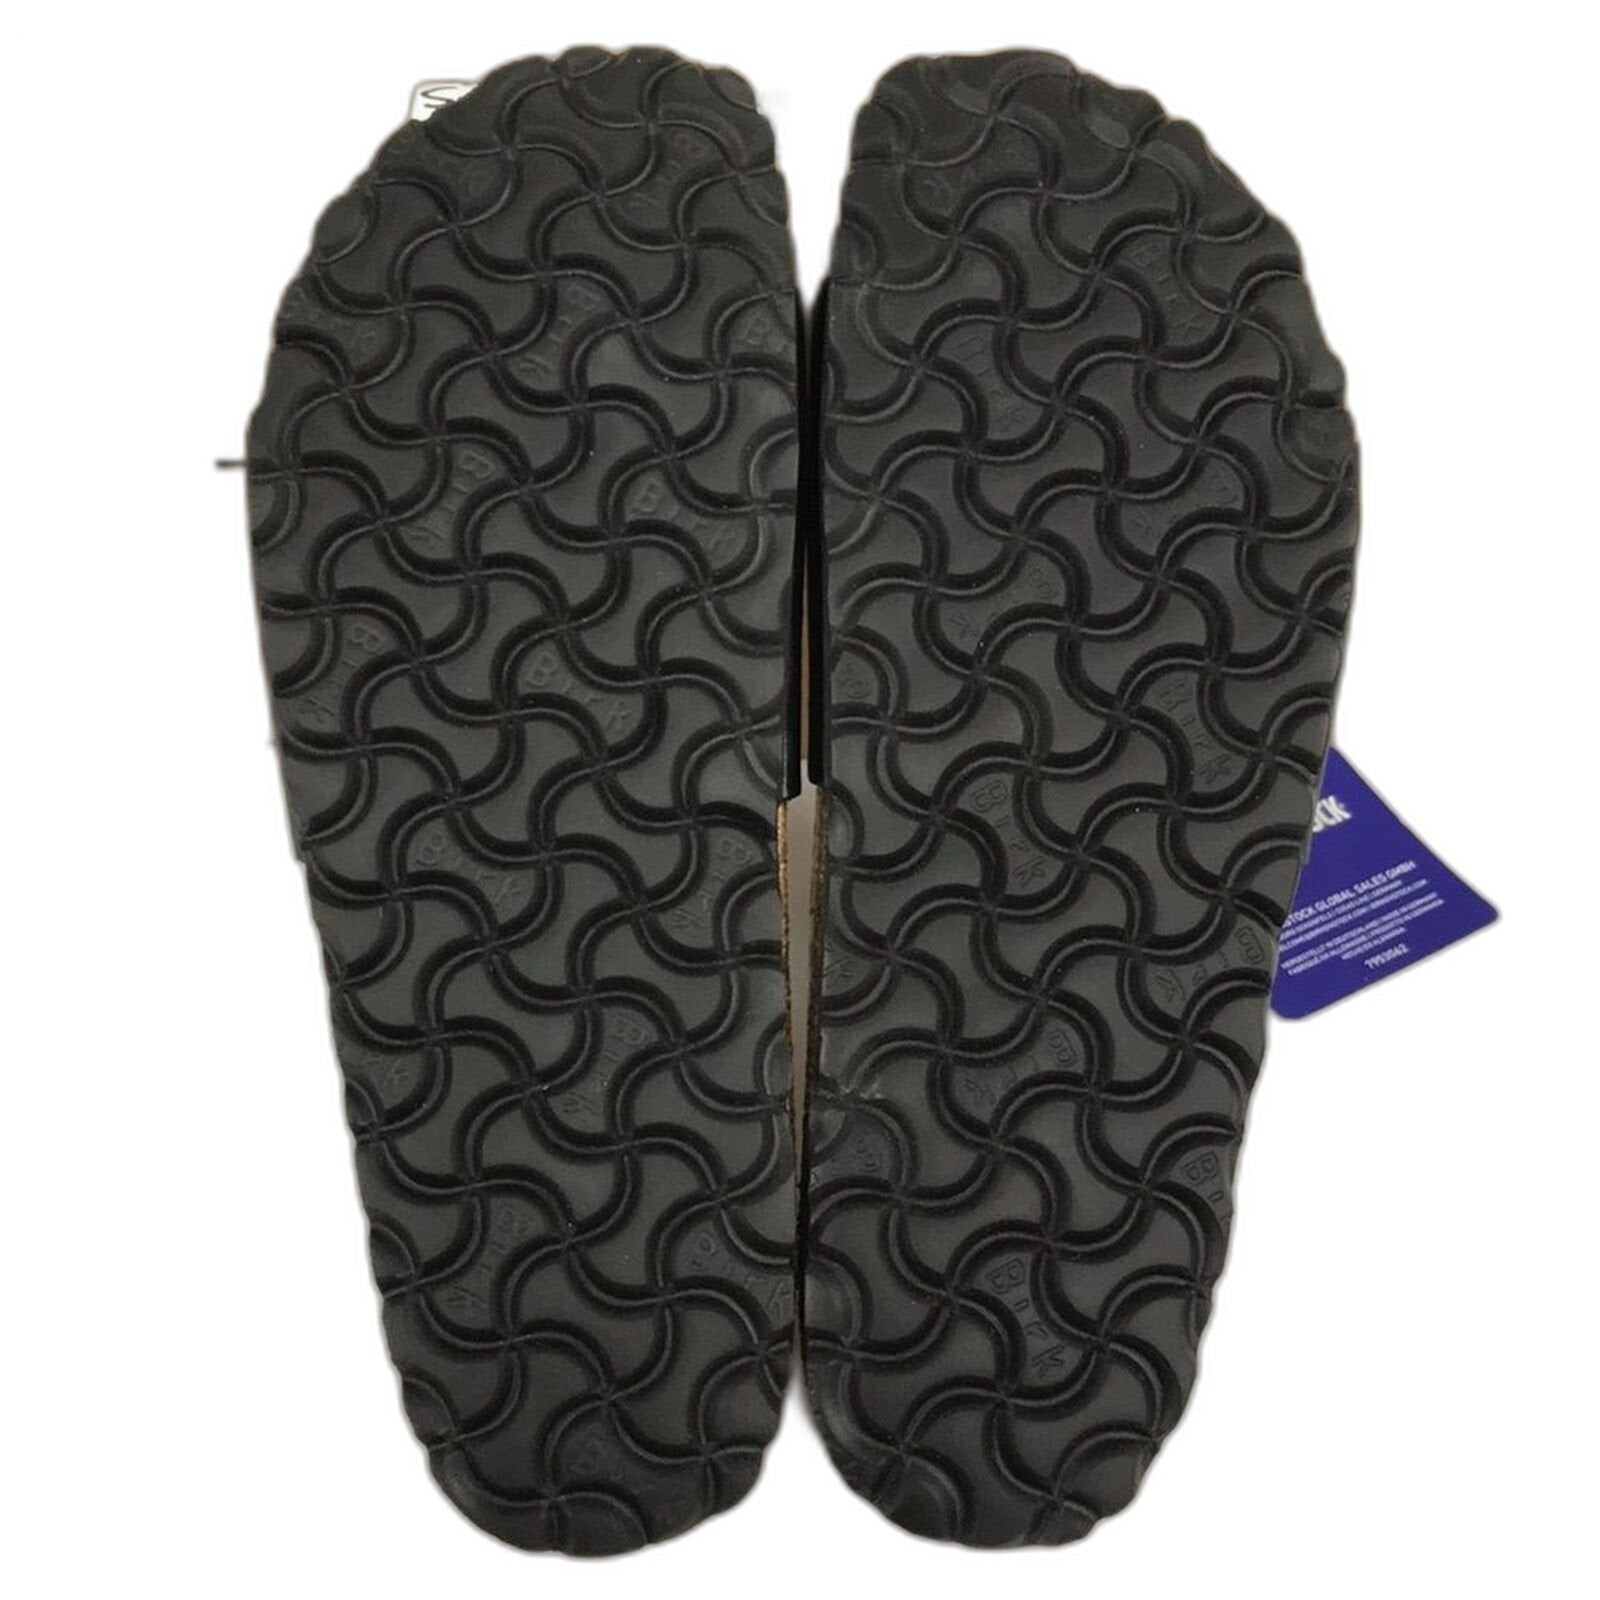 Birkenstock Womens Madrid Black Synthetic Sandals 8 US